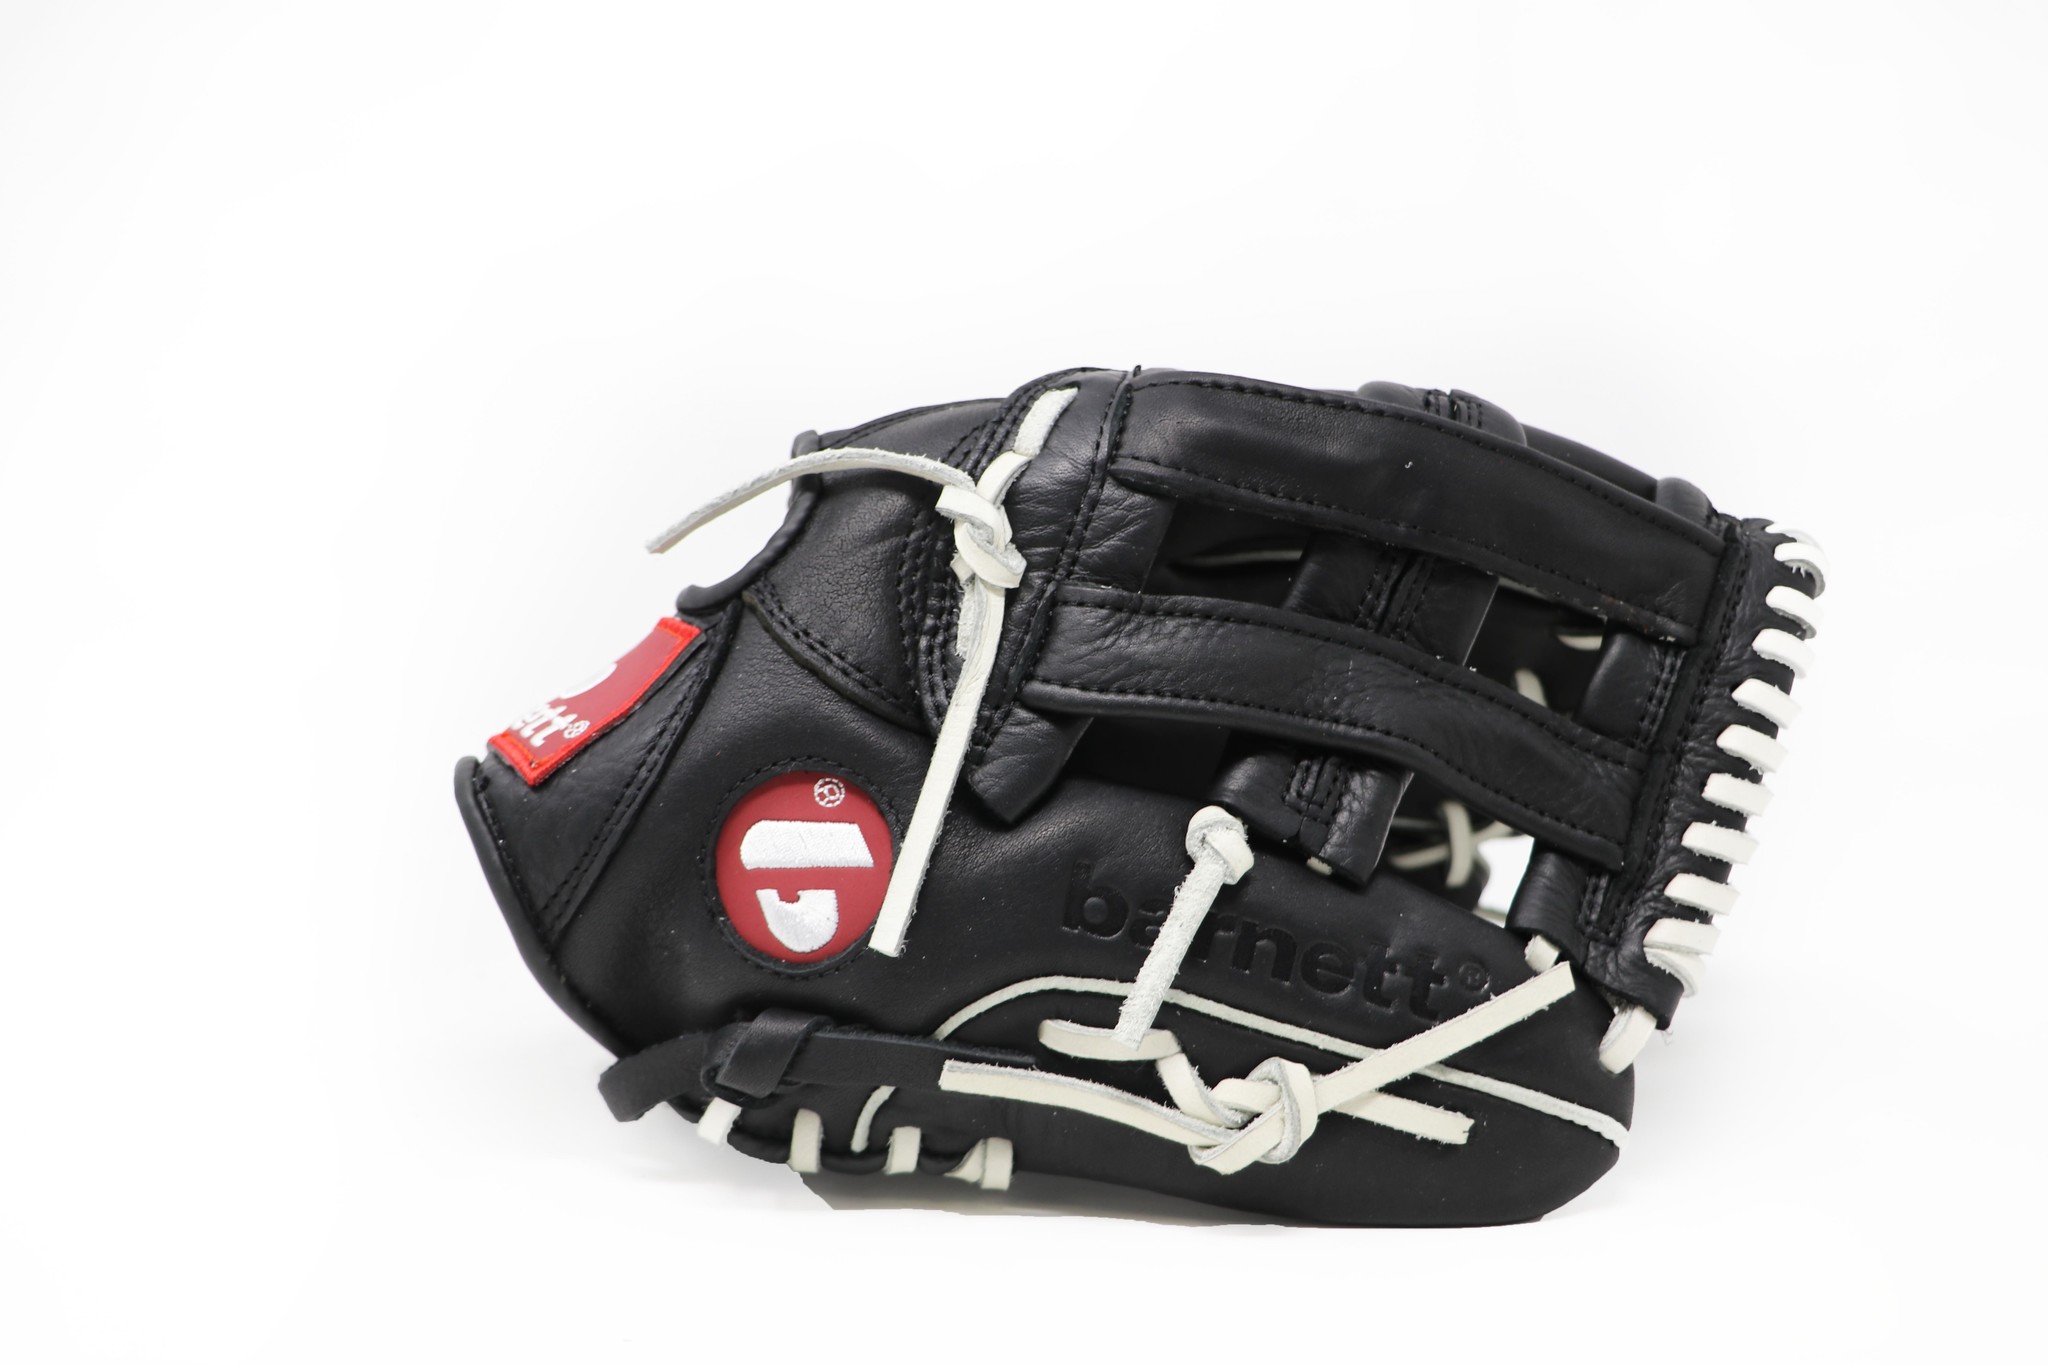 GL-120 gant de baseball cuir de compétition outfield 12", noir